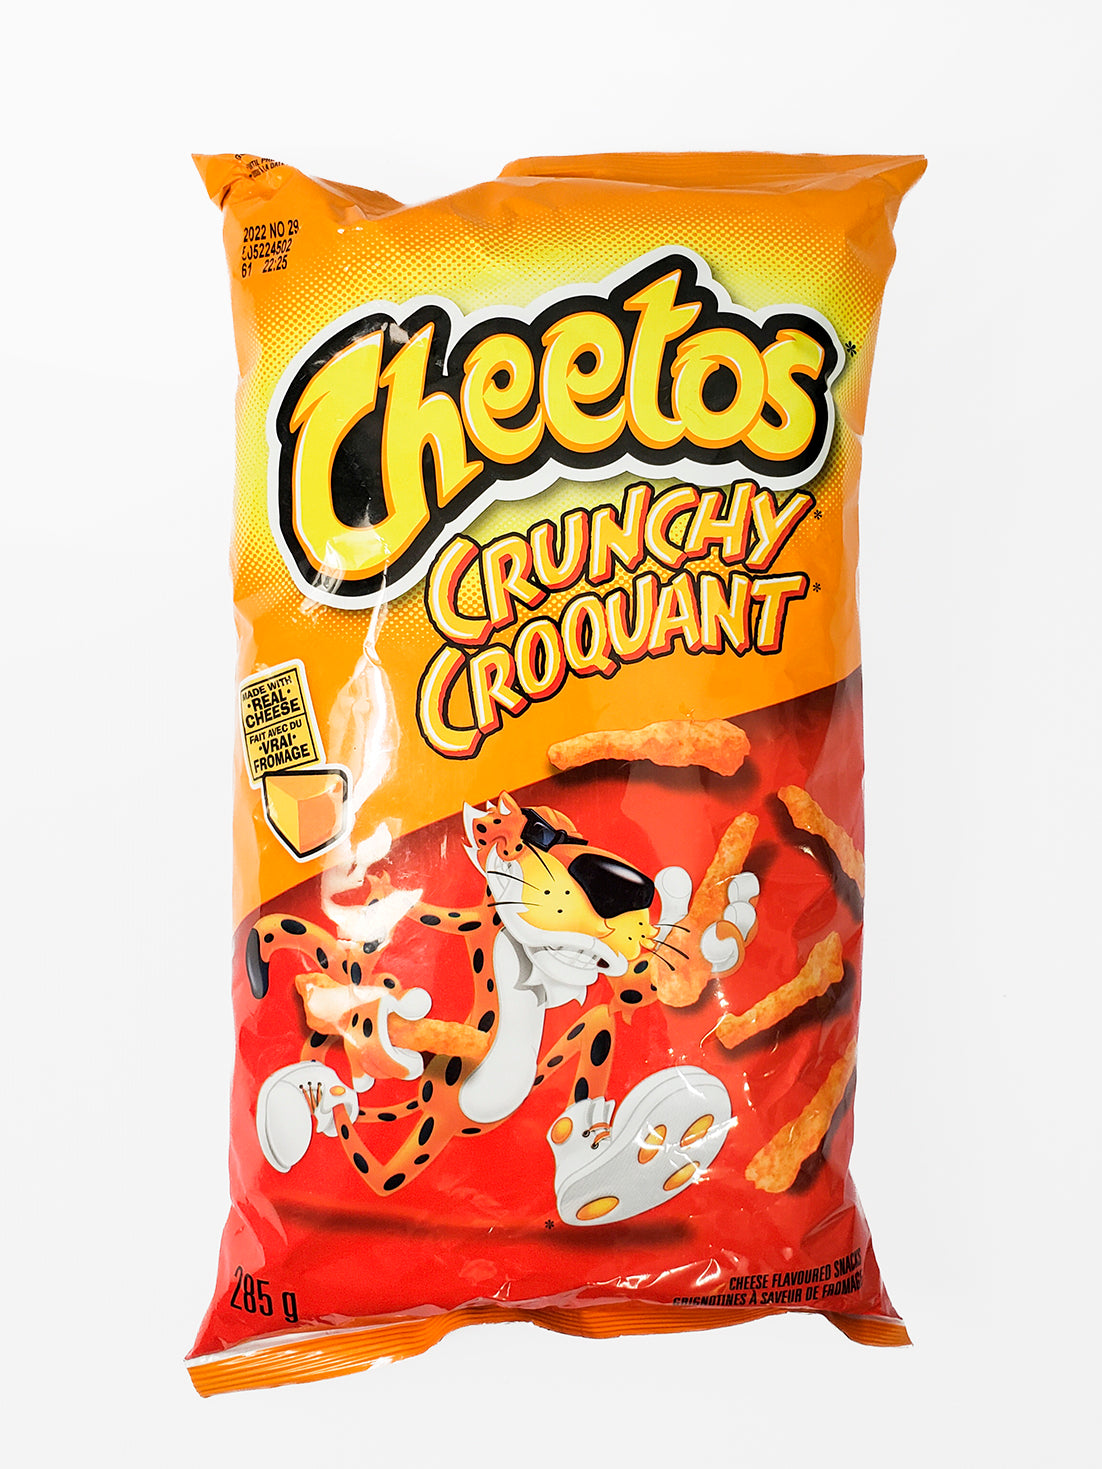 Cheetos Crunchy Flamin' Hot Cheese Flavoured 285g